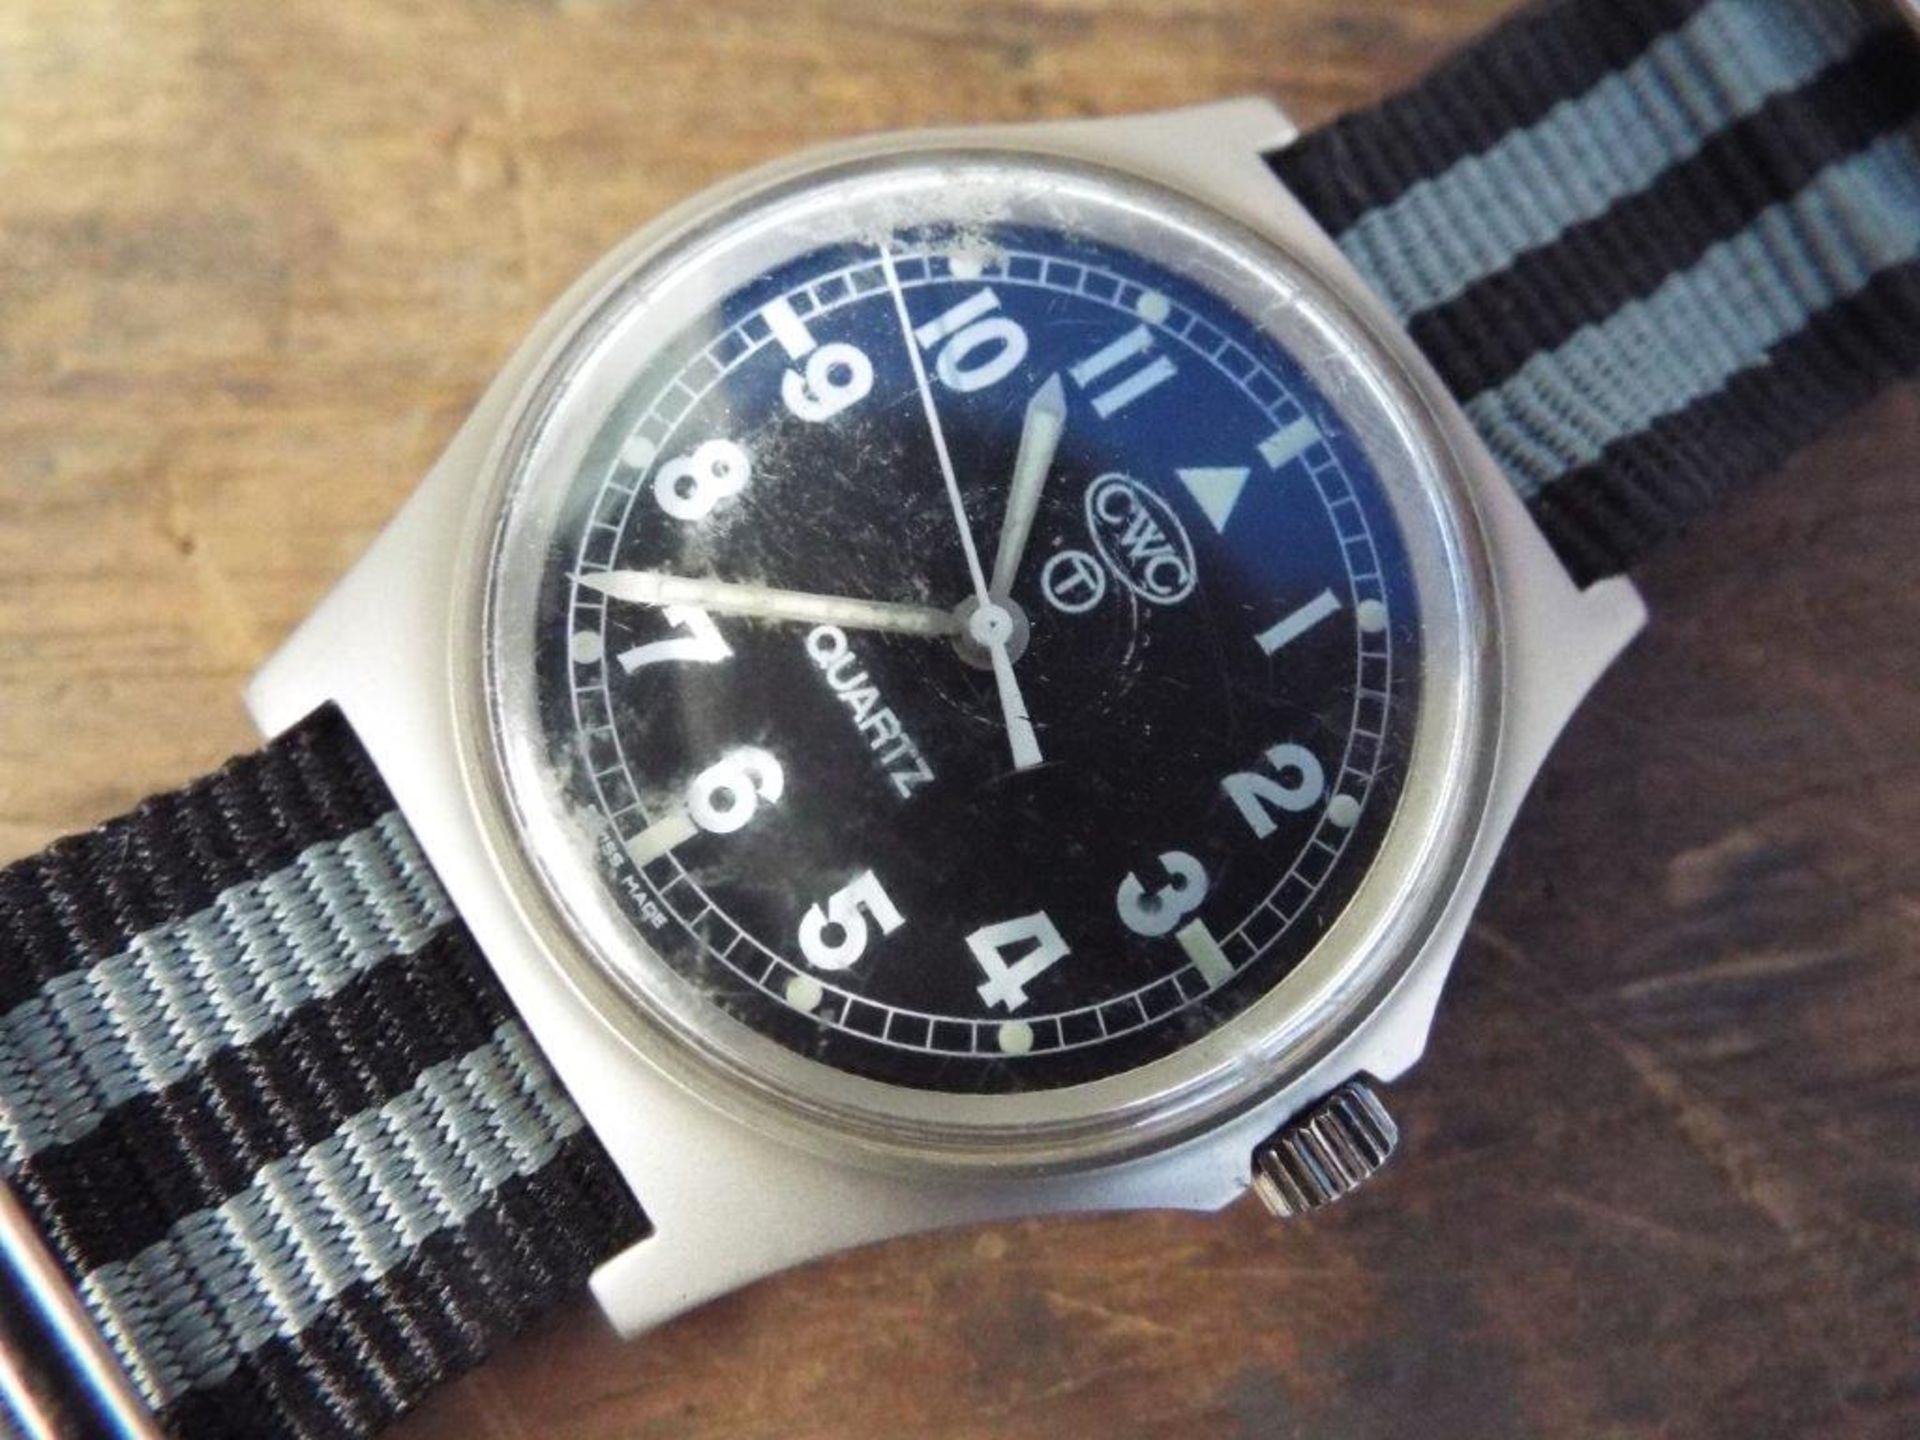 Genuine British Army, CWC Quartz Wrist Watch.